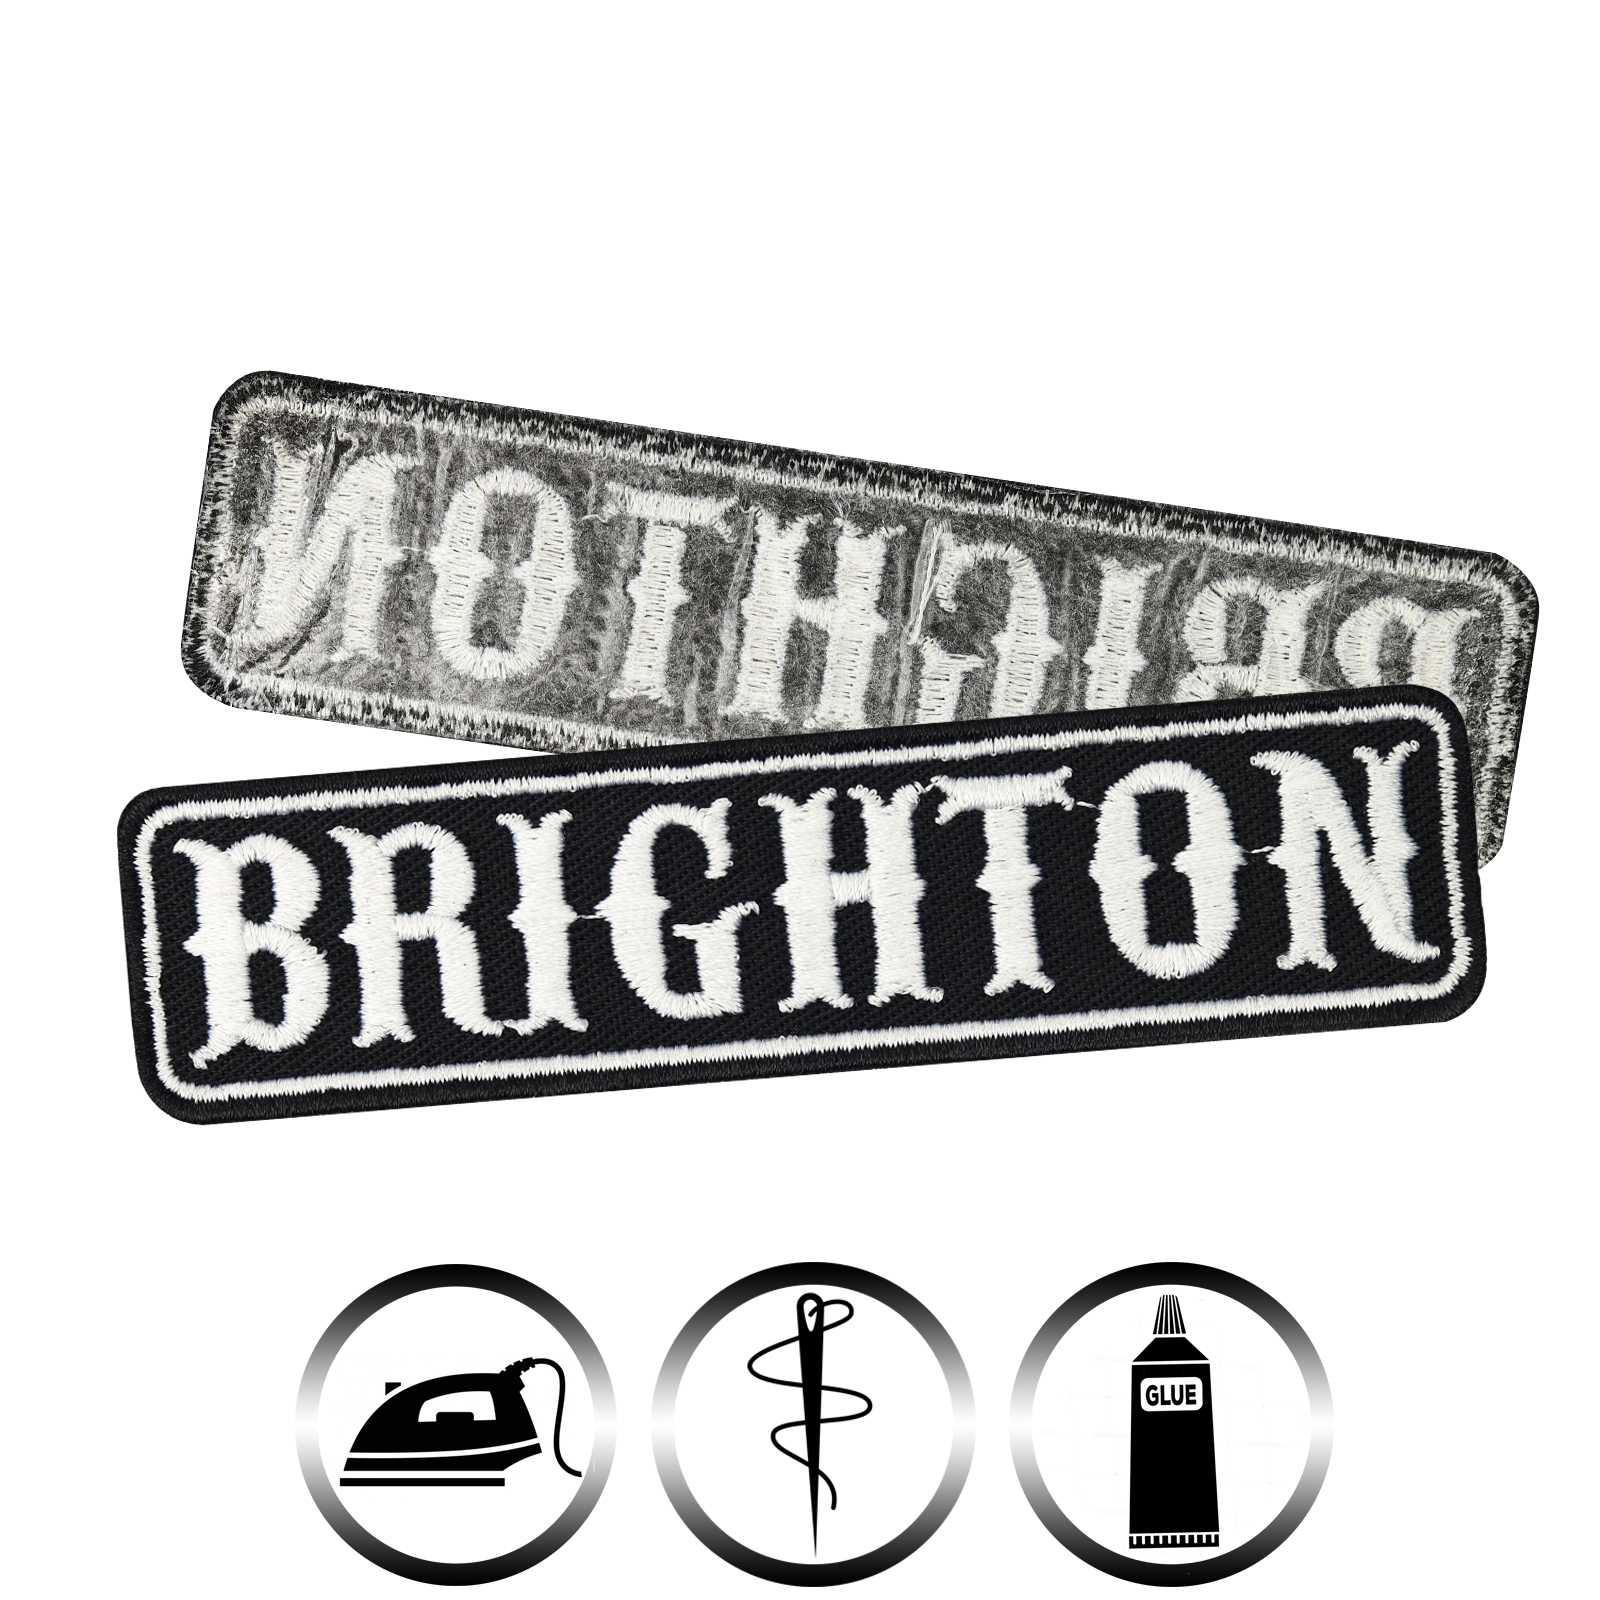 Brighton - Patch